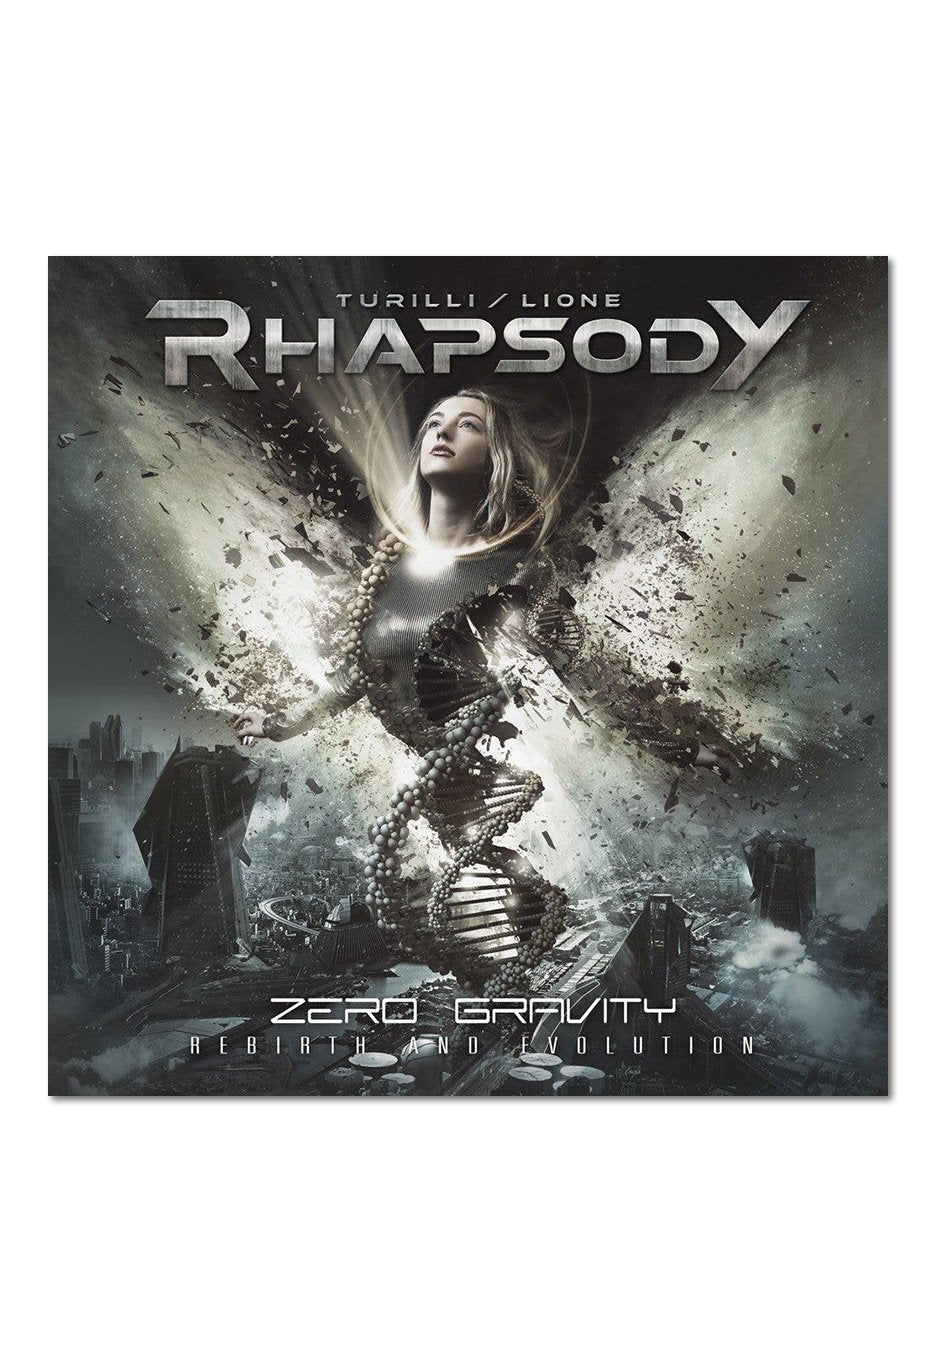 Rhapsody, Turilli / Lione - Zero Gravity (Rebirth And Evolution) - Digipak CD